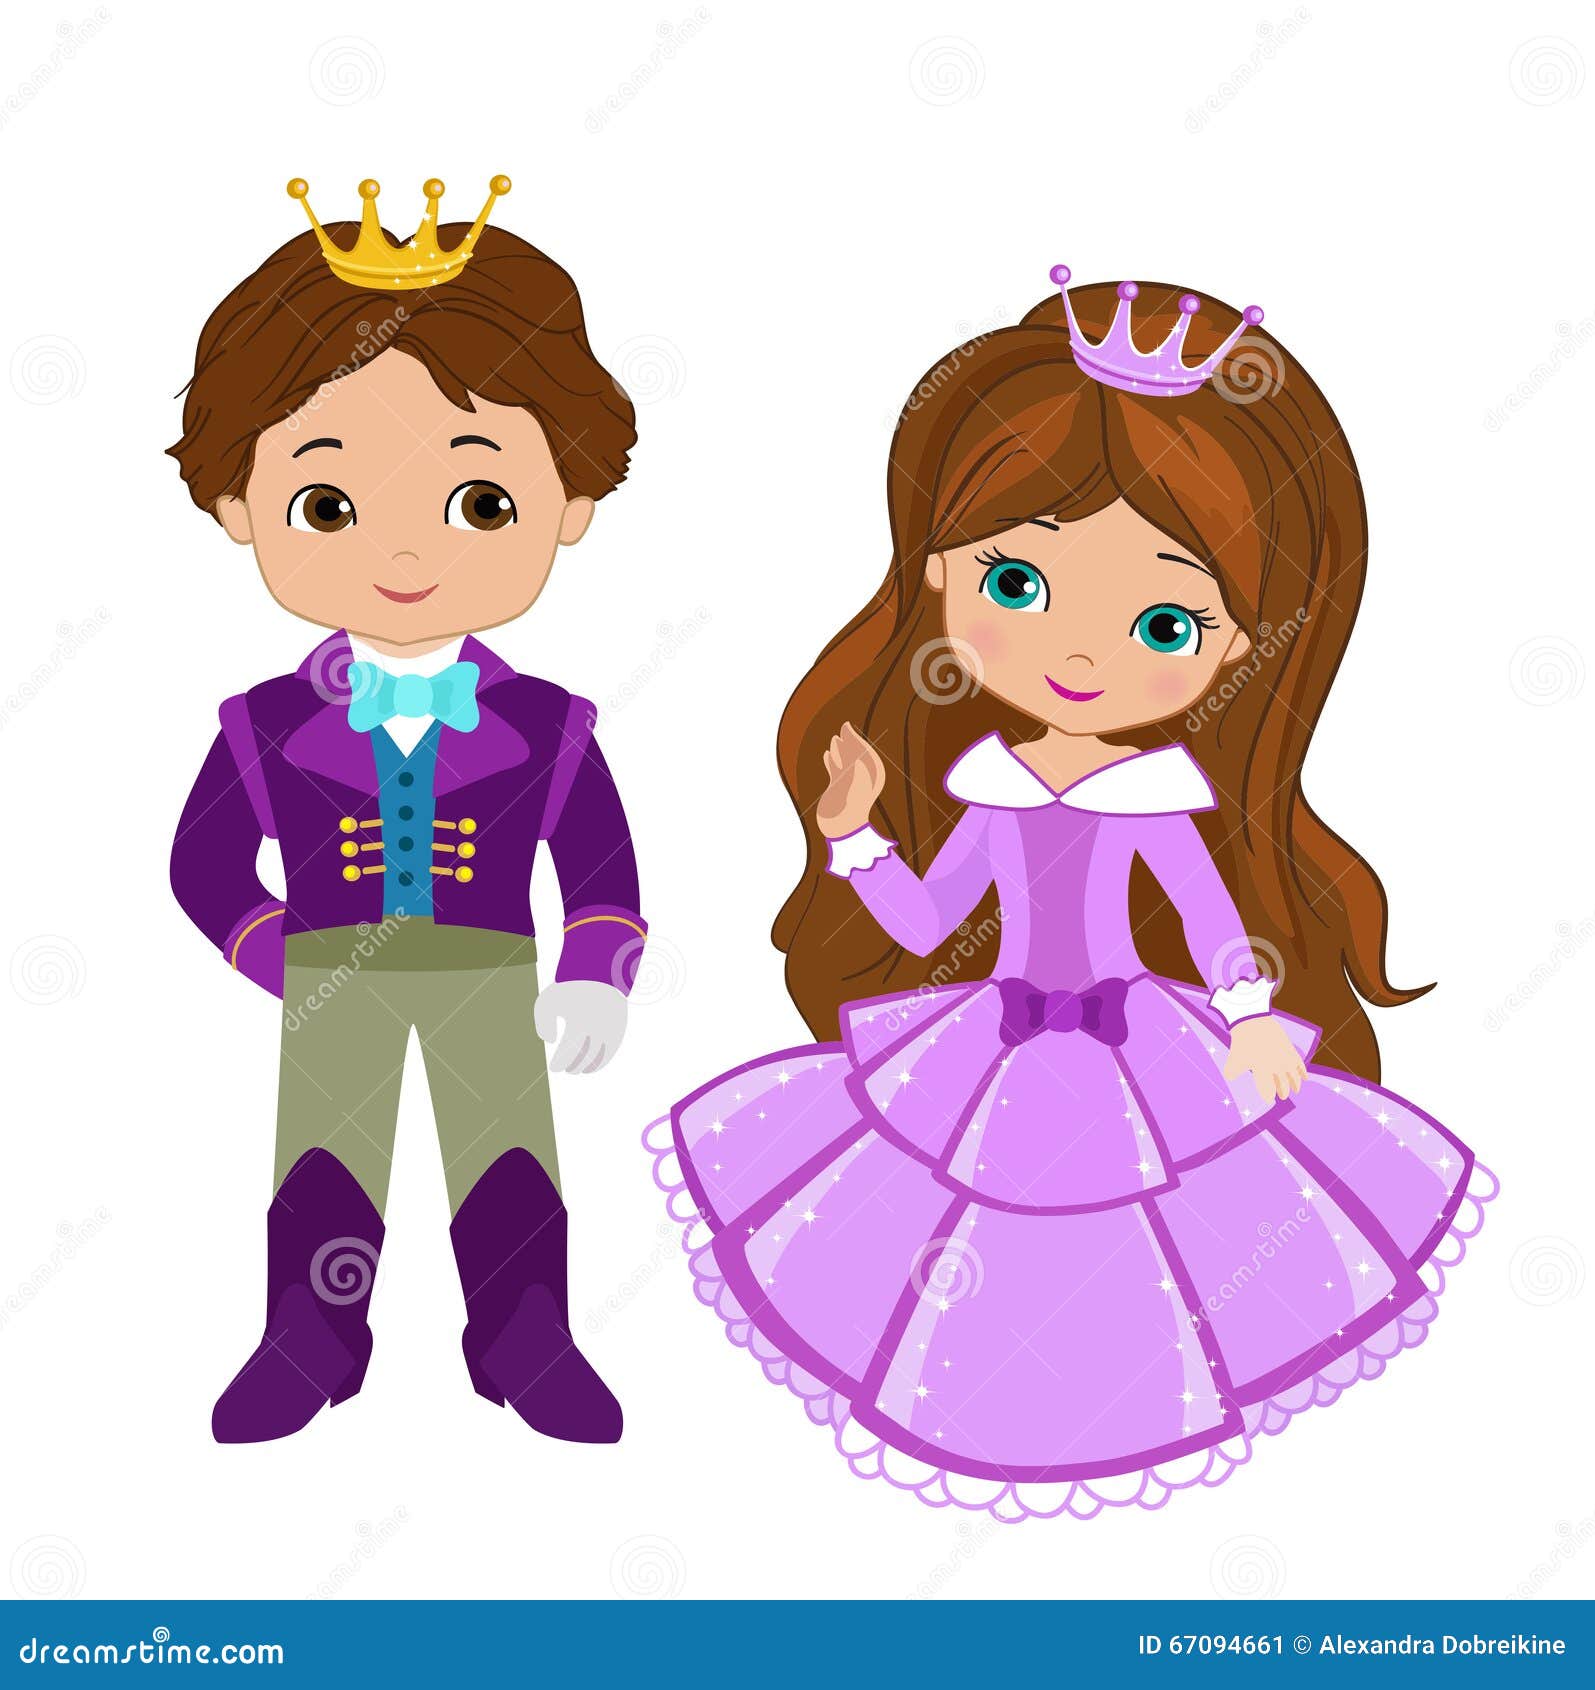 prince and princess clipart free - photo #24